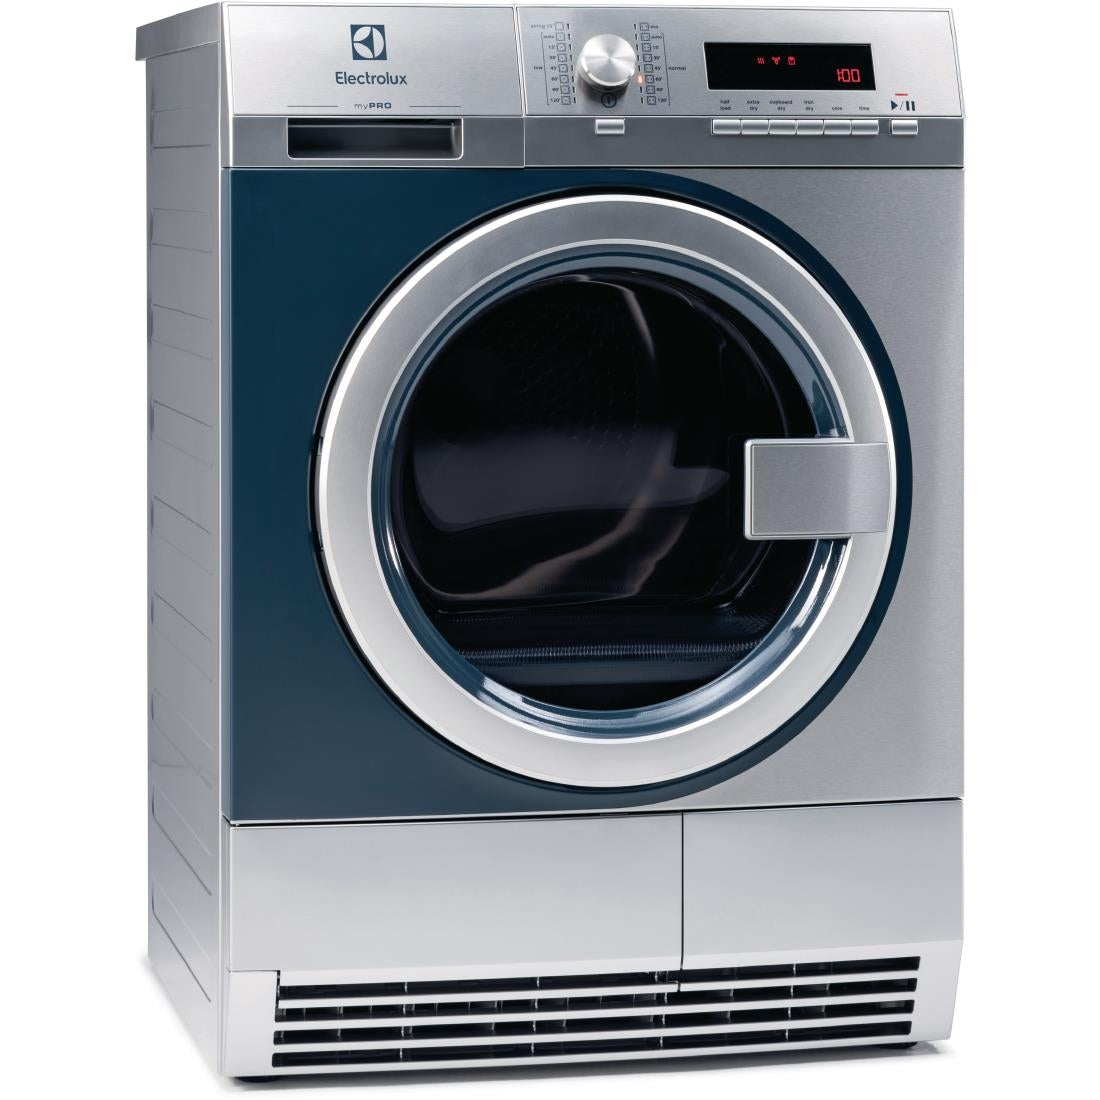 CK376 Electrolux myPRO Commercial Tumble Dryer TE1120